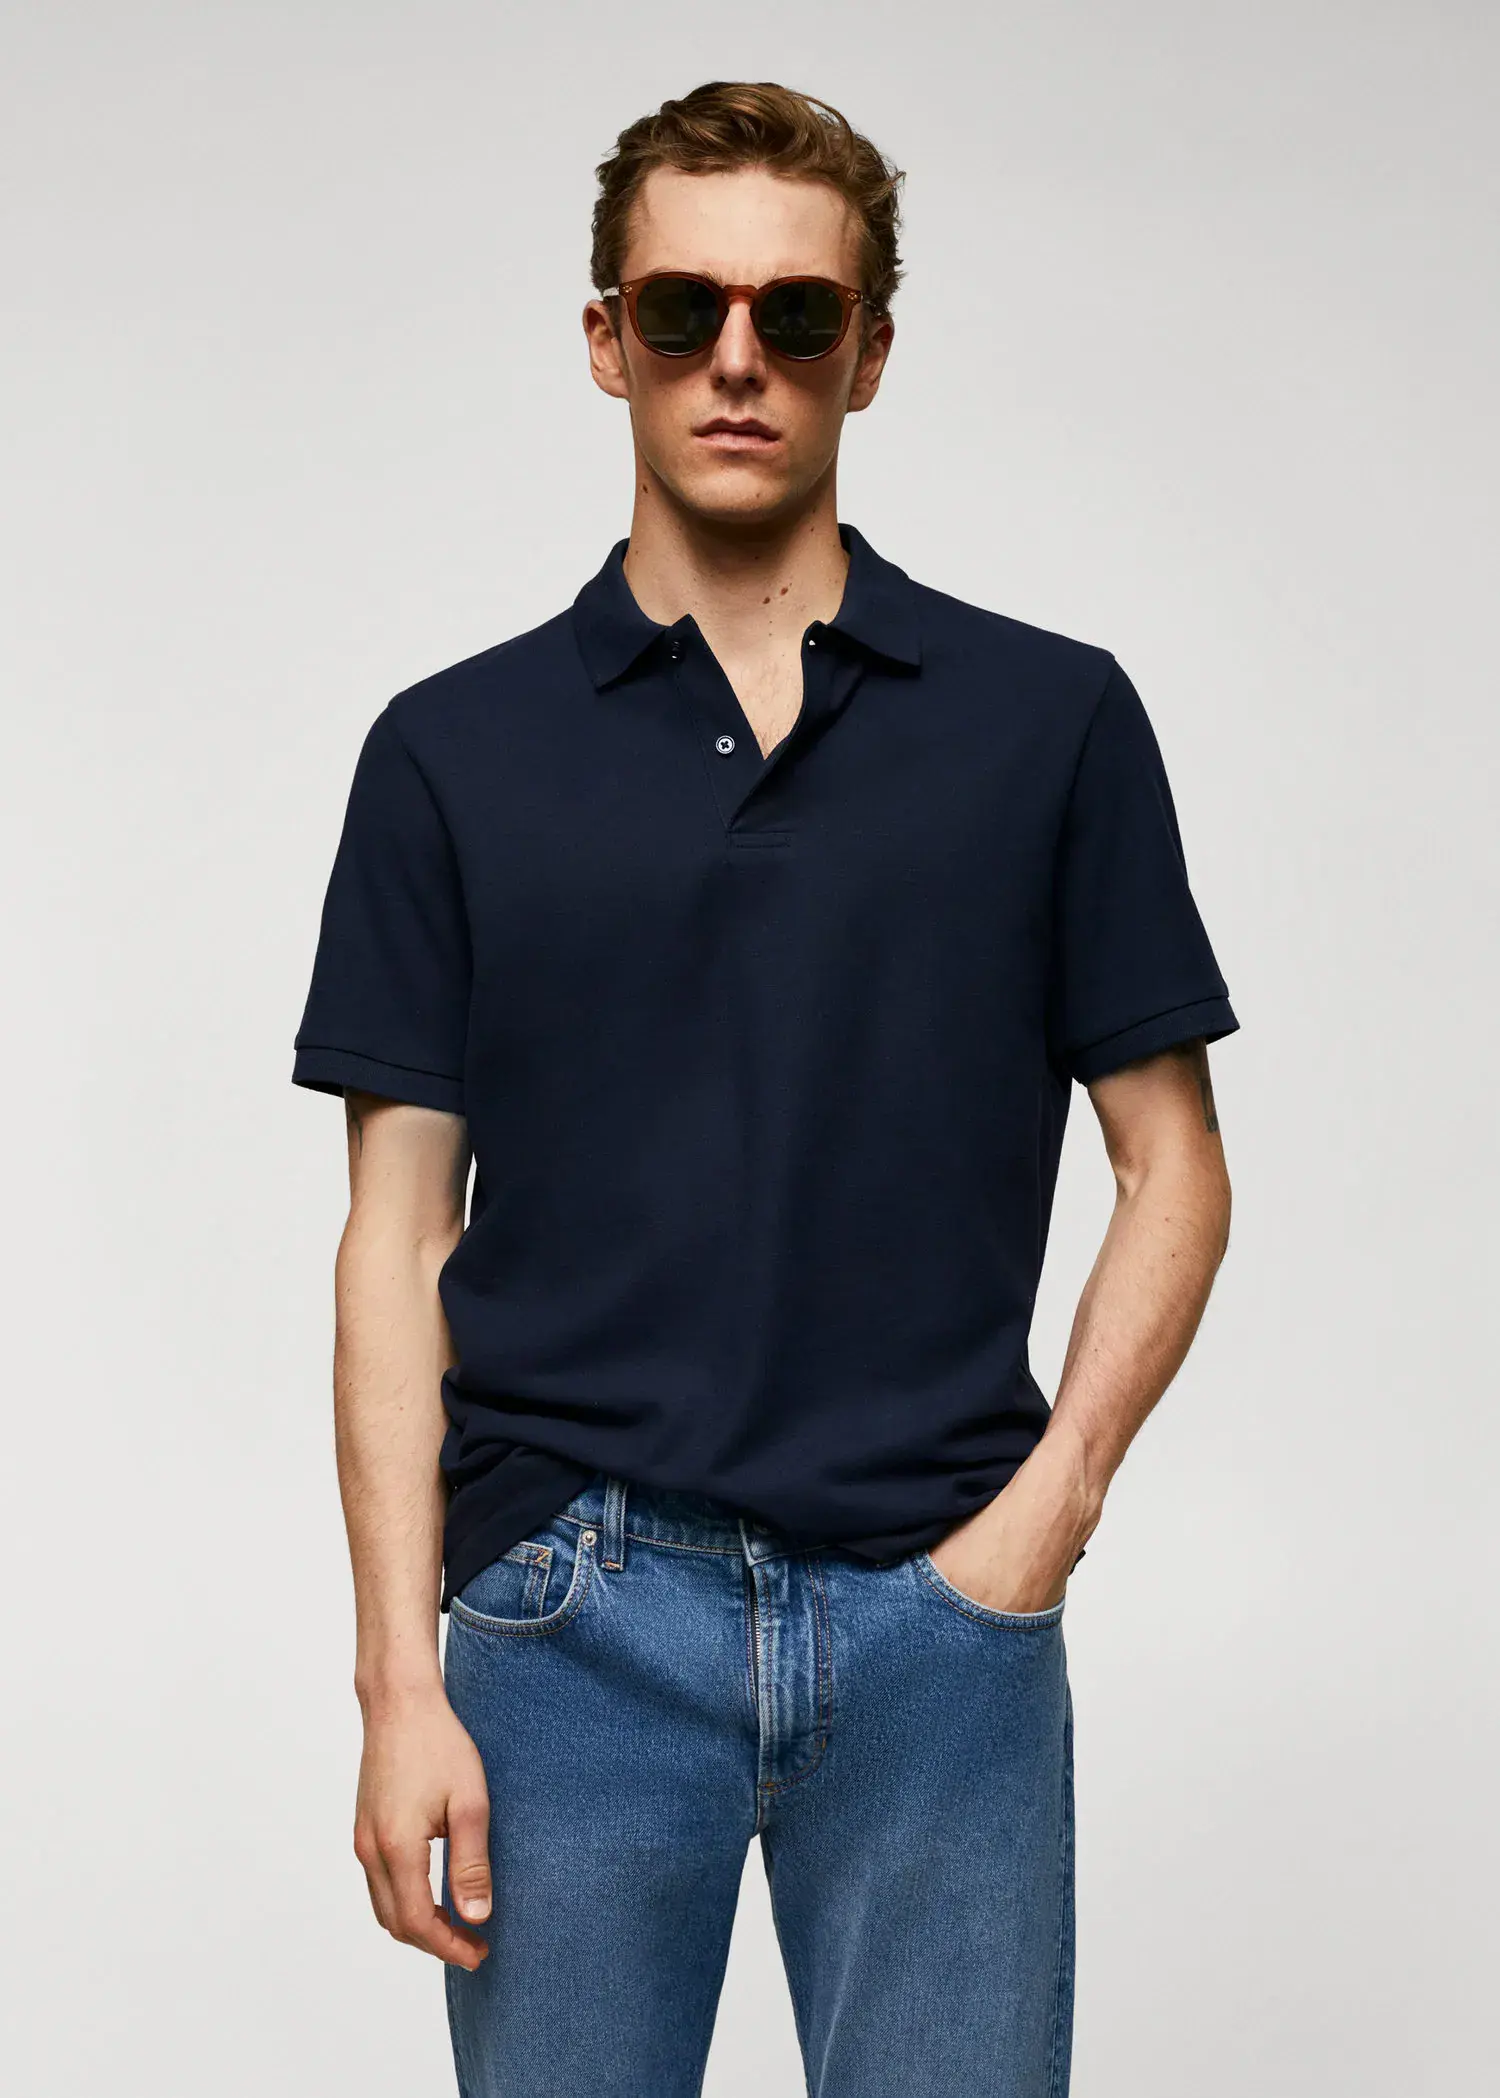 Mango 100% cotton pique polo shirt. a man in a black shirt and sunglasses. 